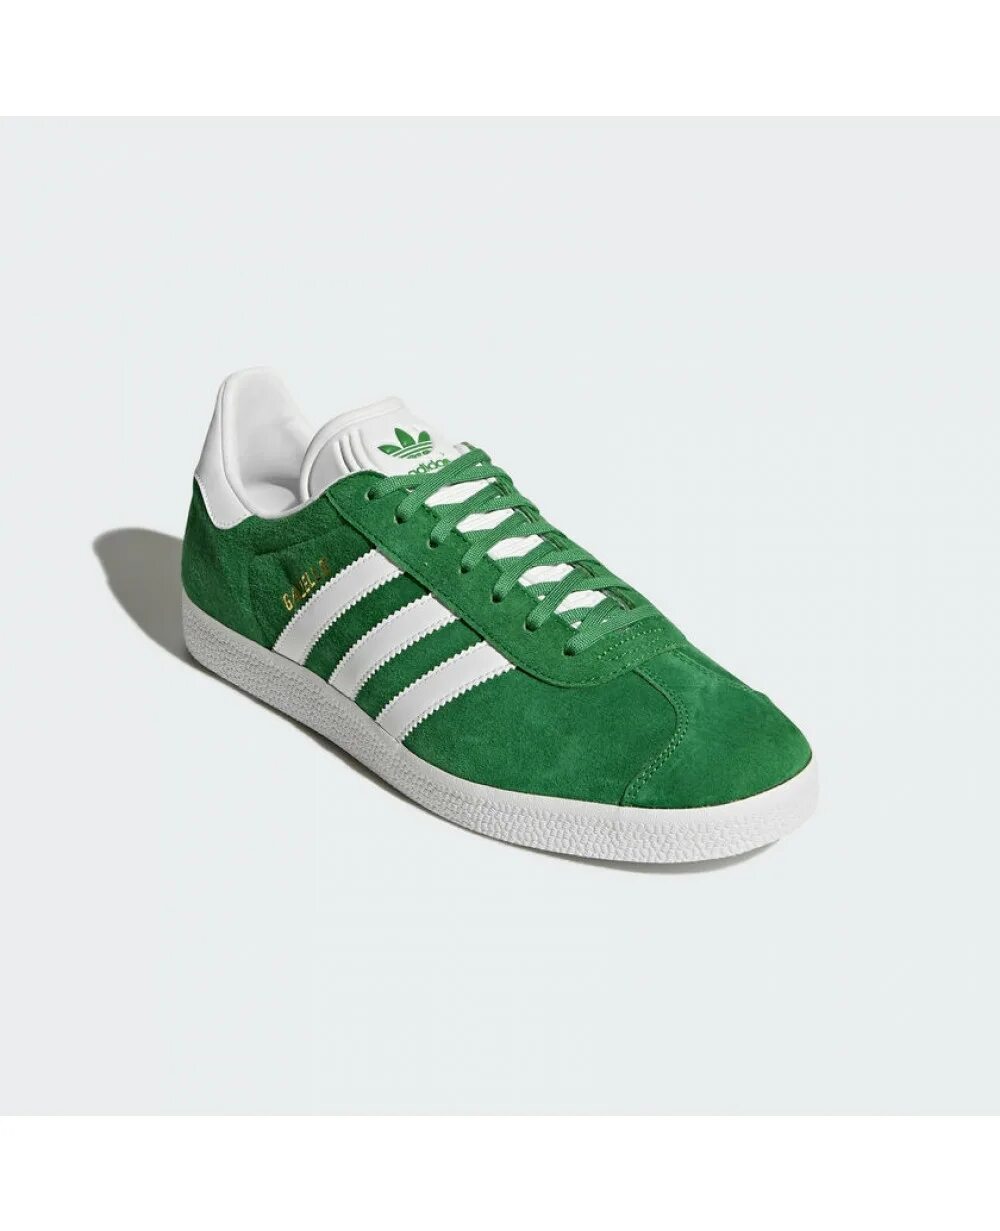 Кроссовки adidas Gazelle Green. Adidas Gazelle зеленые. Adidas Gazelle Green Original. Adidas кеды Gazelle зеленый.